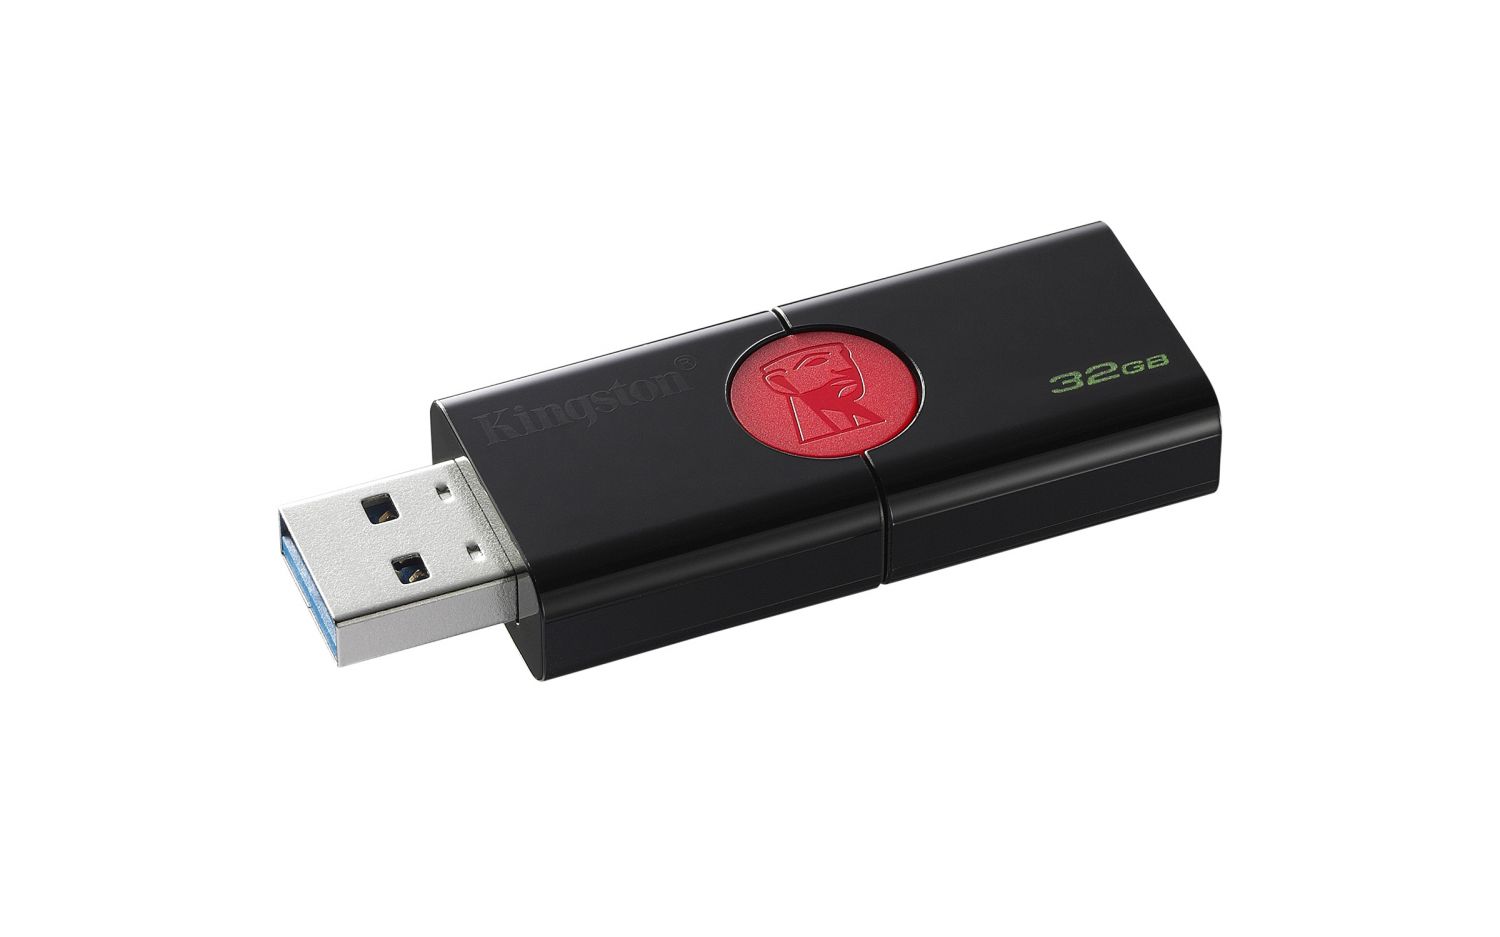 DT106/32GB - Unidad flash USB Kingston Technology DataTraveler 106 unidad  USB 32 GB 3.0 (3.1 Gen 1) Conector USB Tipo A Negro, Rojo